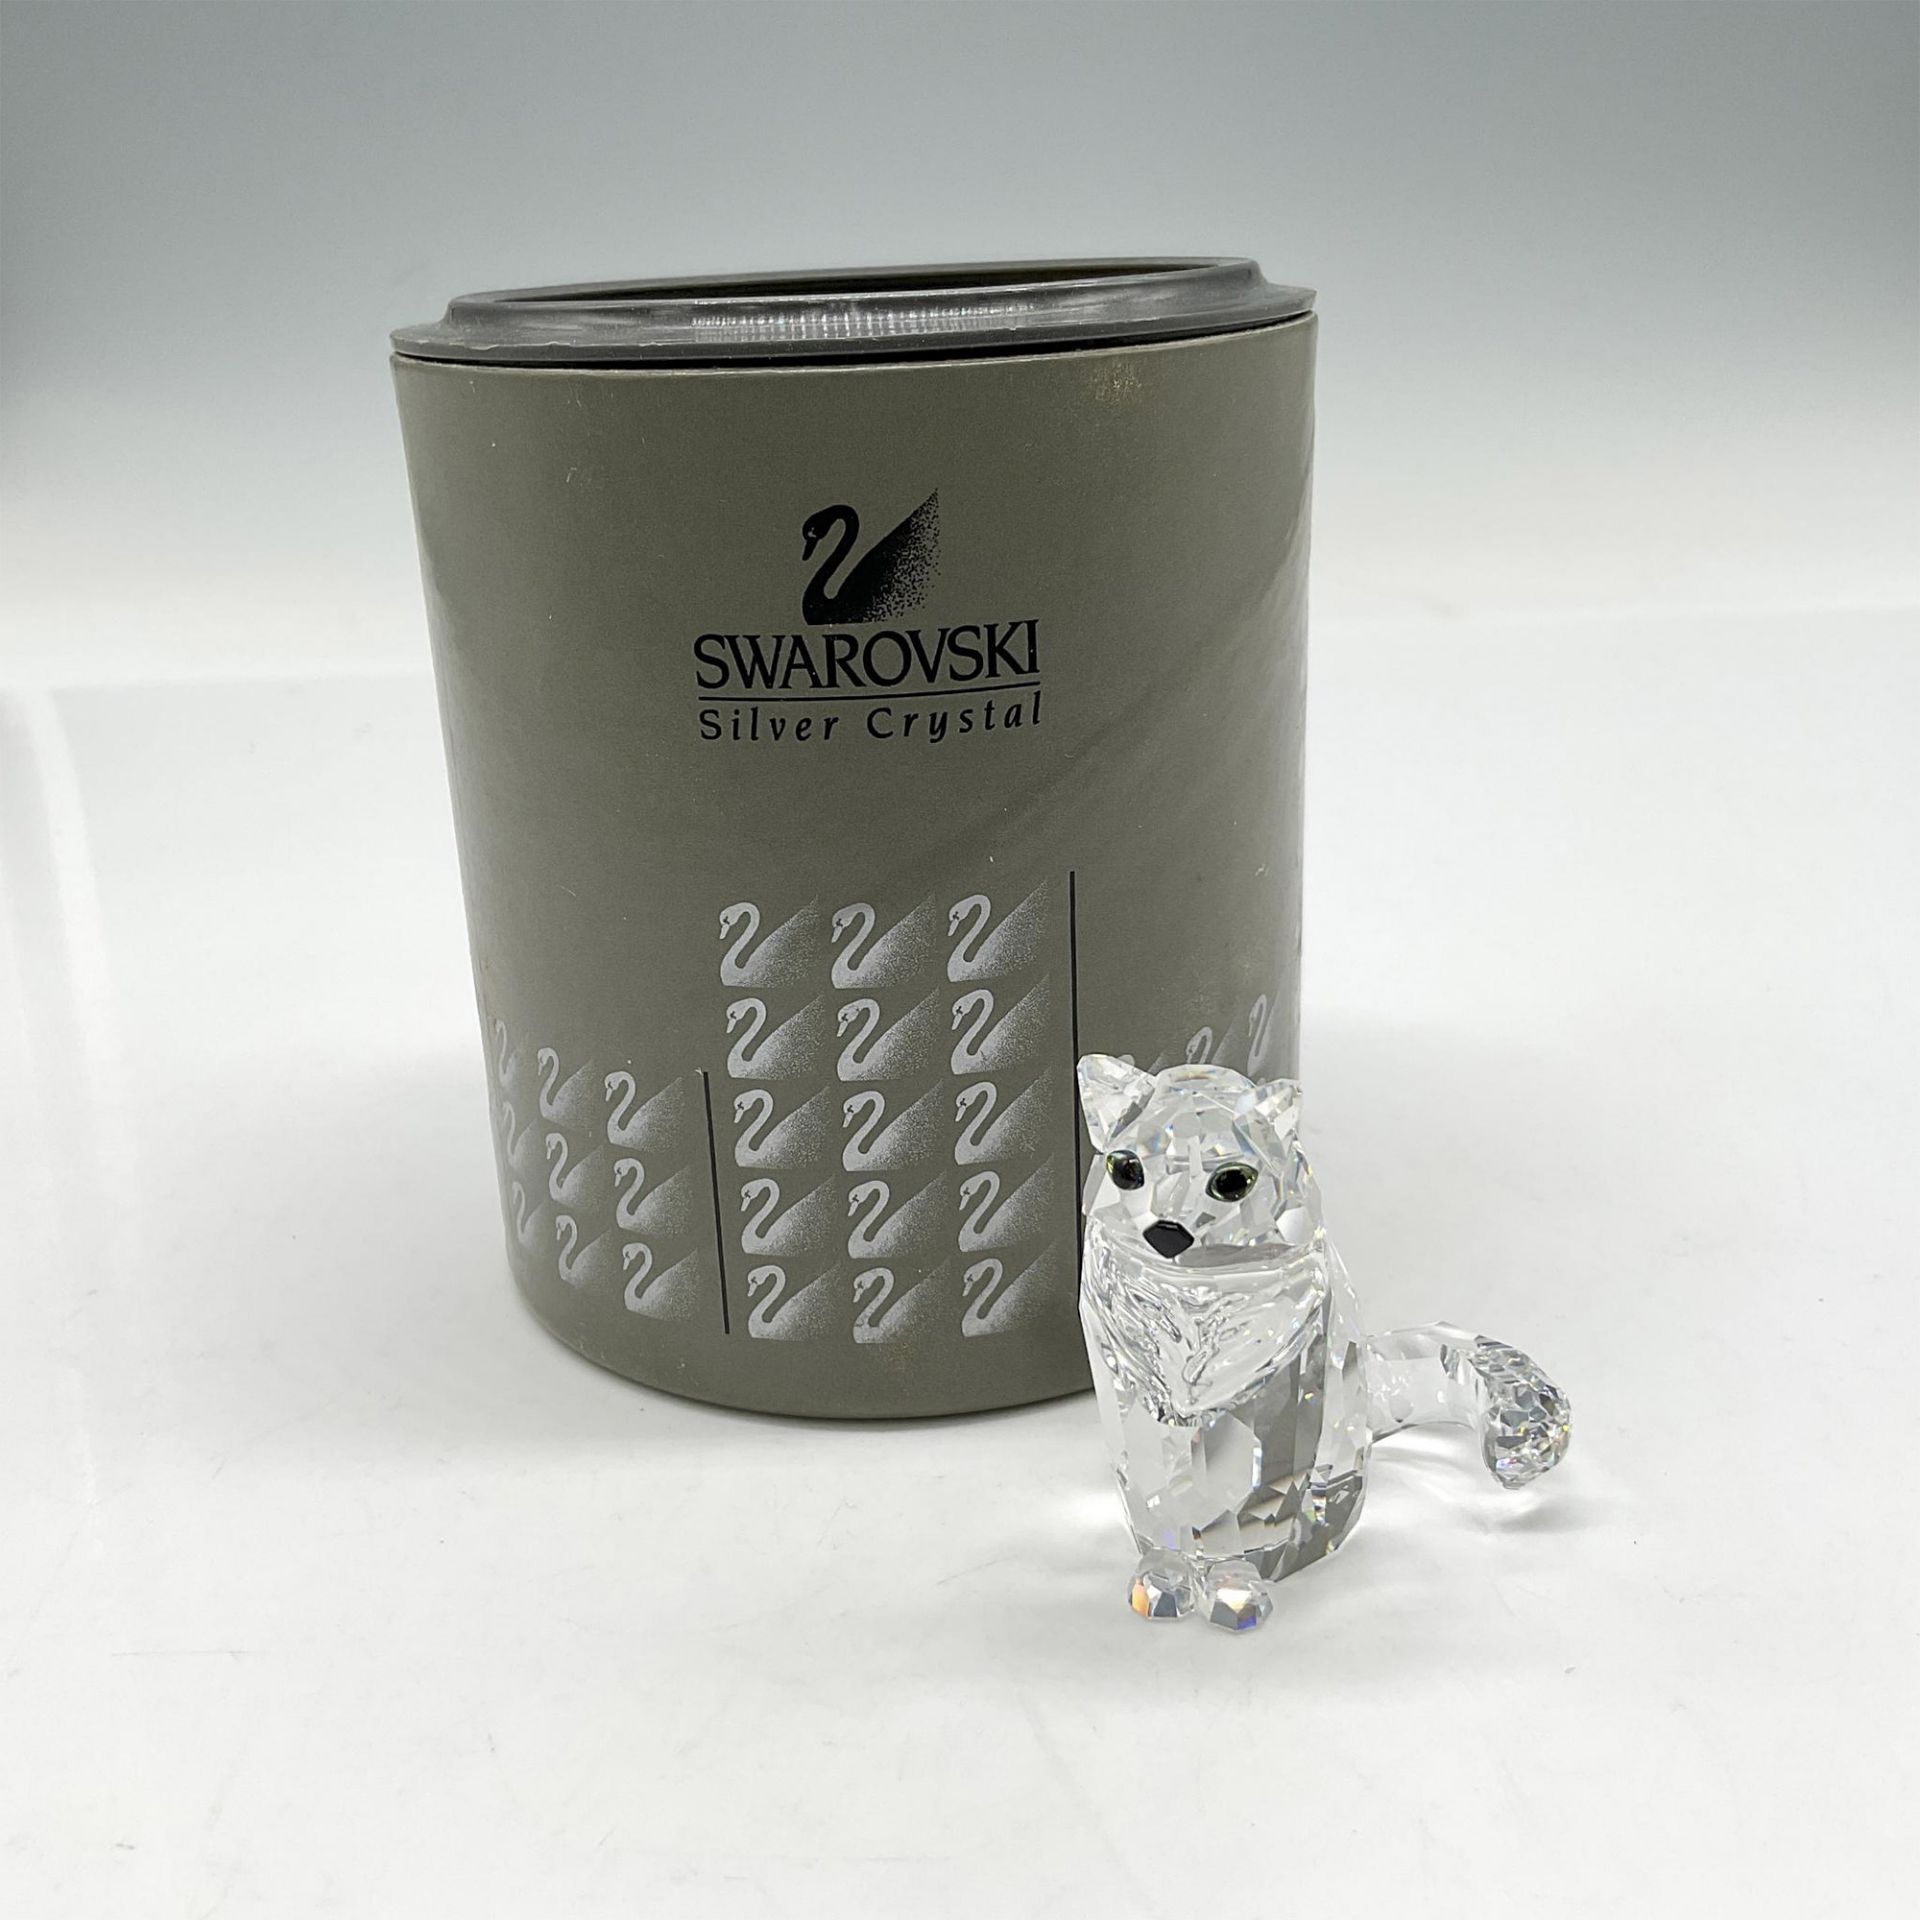 Swarovski Silver Crystal Figurine, Sitting Cat - Image 4 of 4